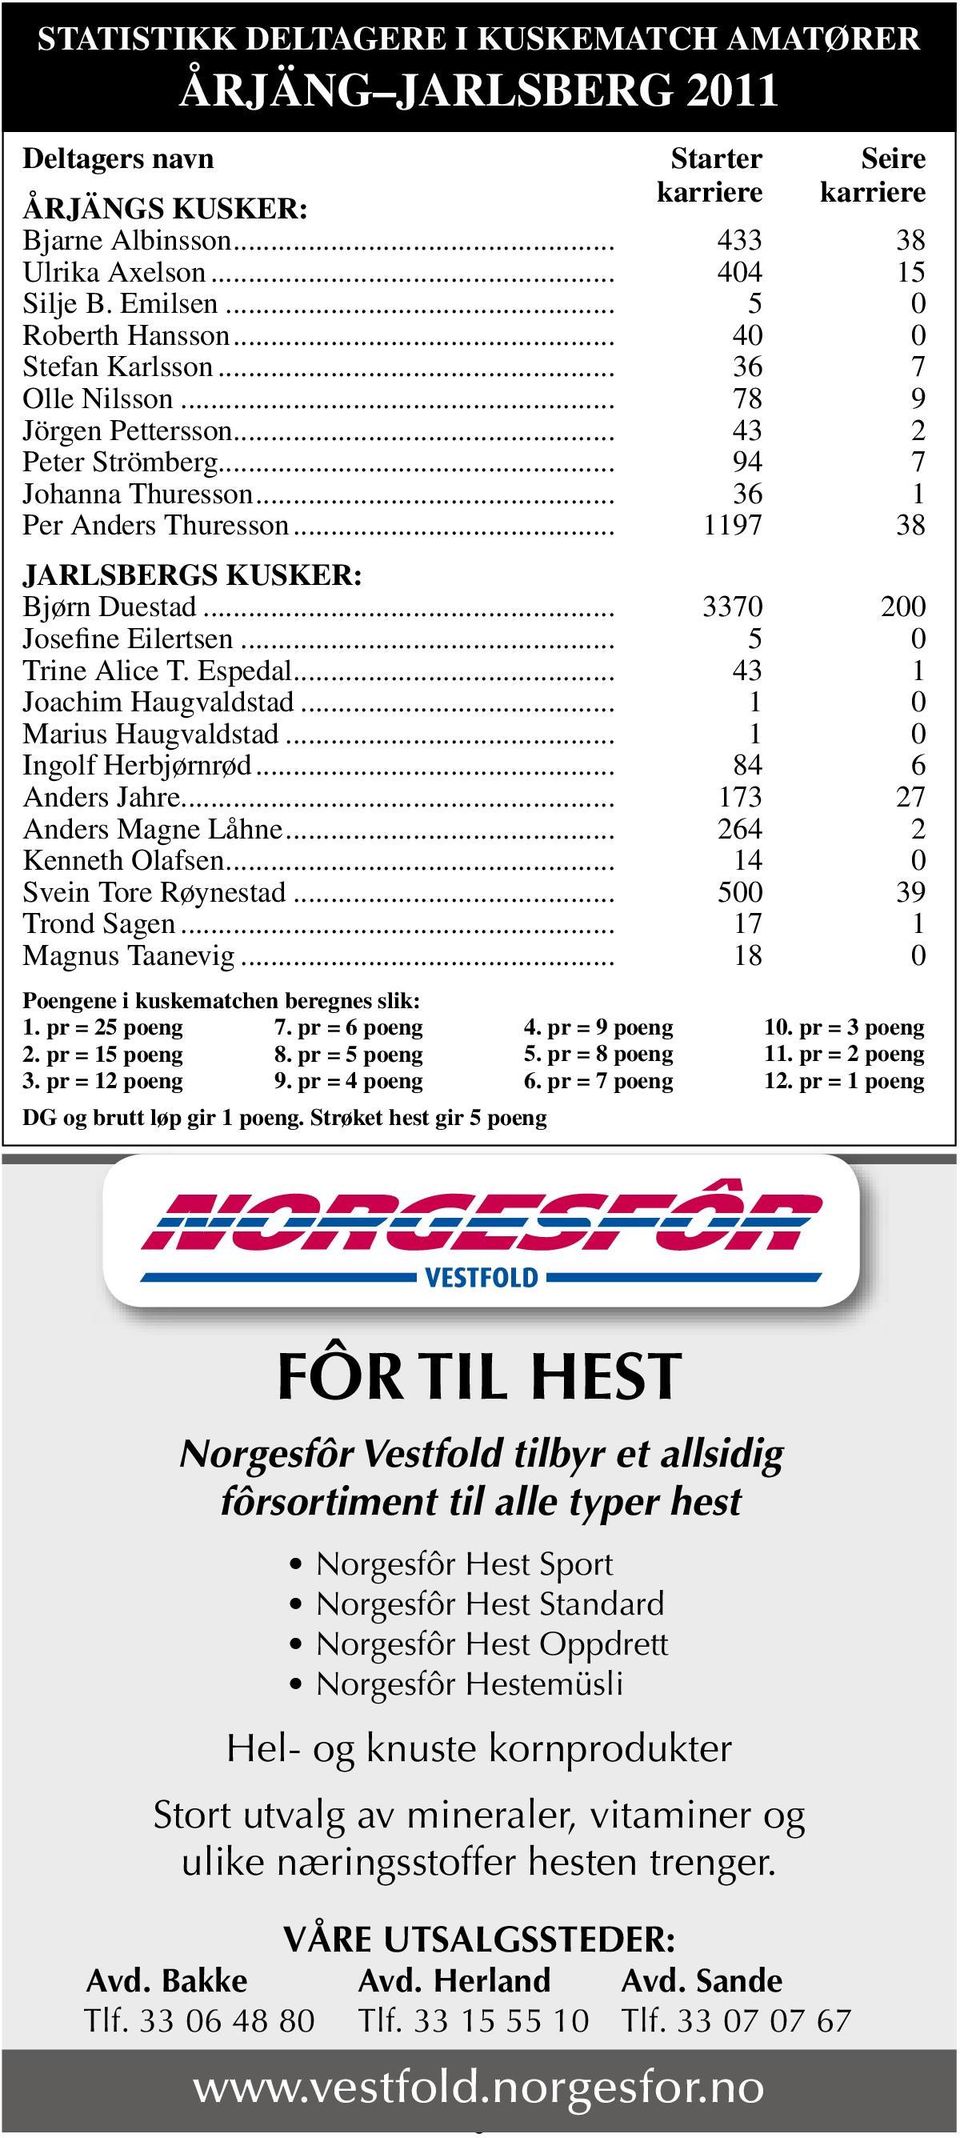 .. 1197 38 JARLSBERGS KUSKER: Bjørn Duestad... 3370 200 Josefine Eilertsen... 5 0 Trine Alice T. Espedal... 43 1 Joachim Haugvaldstad... 1 0 Marius Haugvaldstad... 1 0 Ingolf Herbjørnrød.